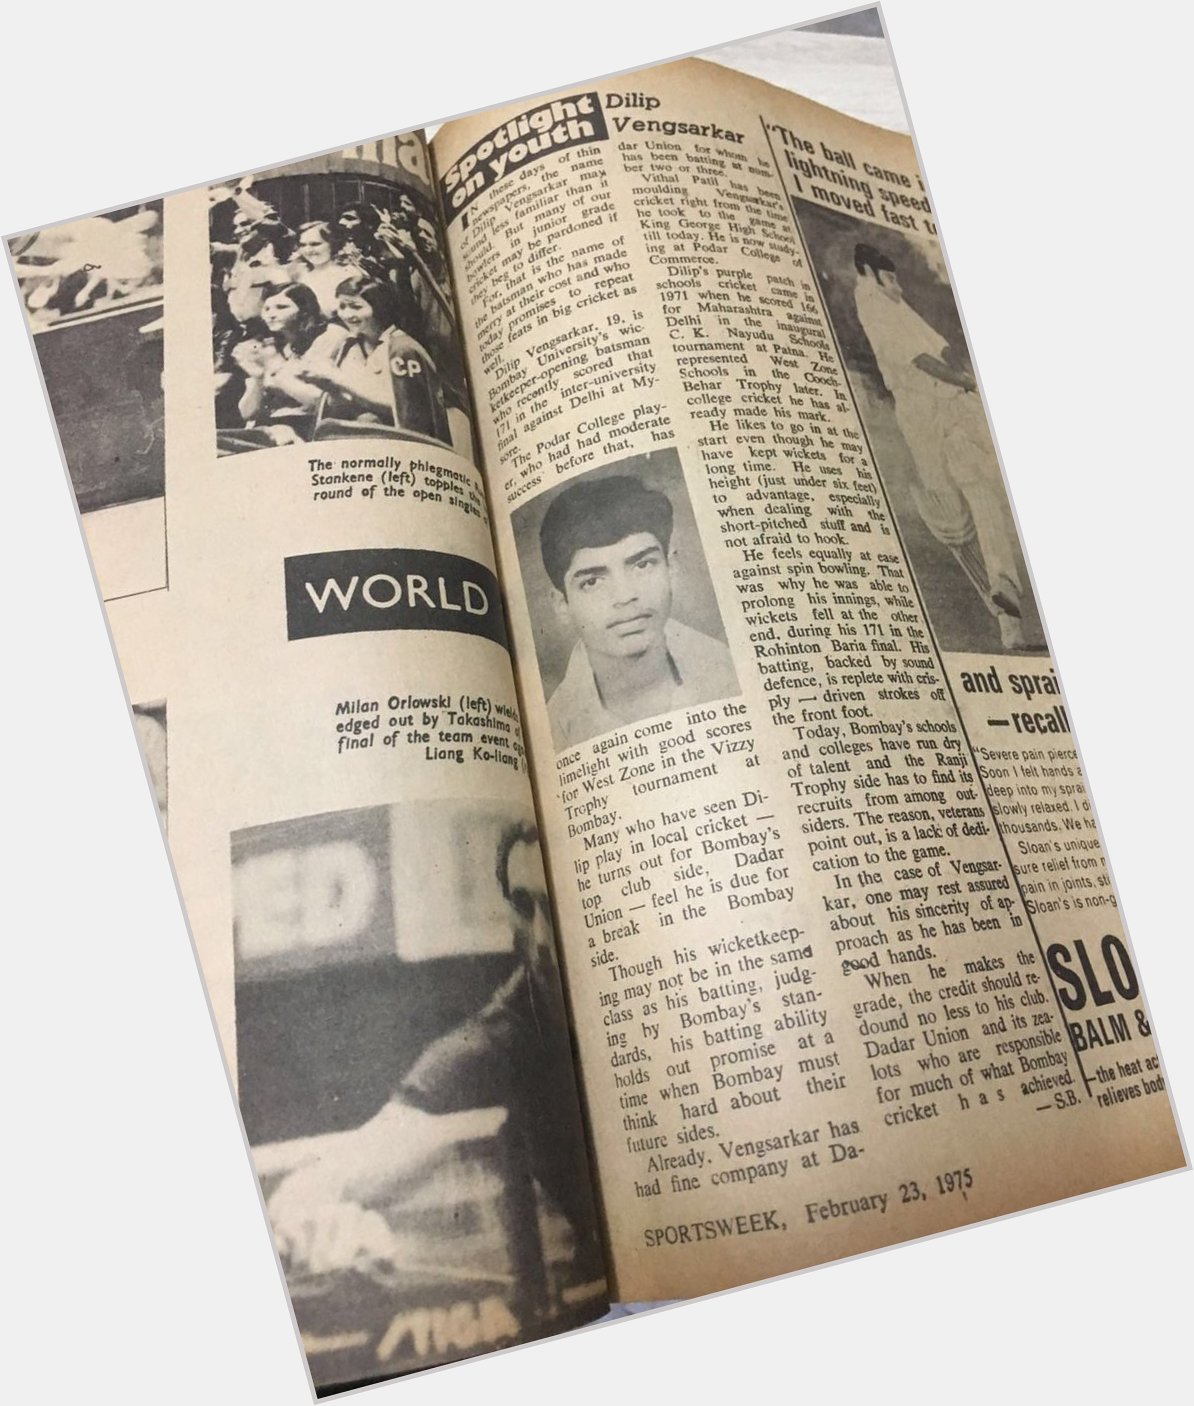 Happy birthday, Dilip Vengsarkar. Here s a Feb 23, 1975 profile on him in popular magazine Sportweek... 